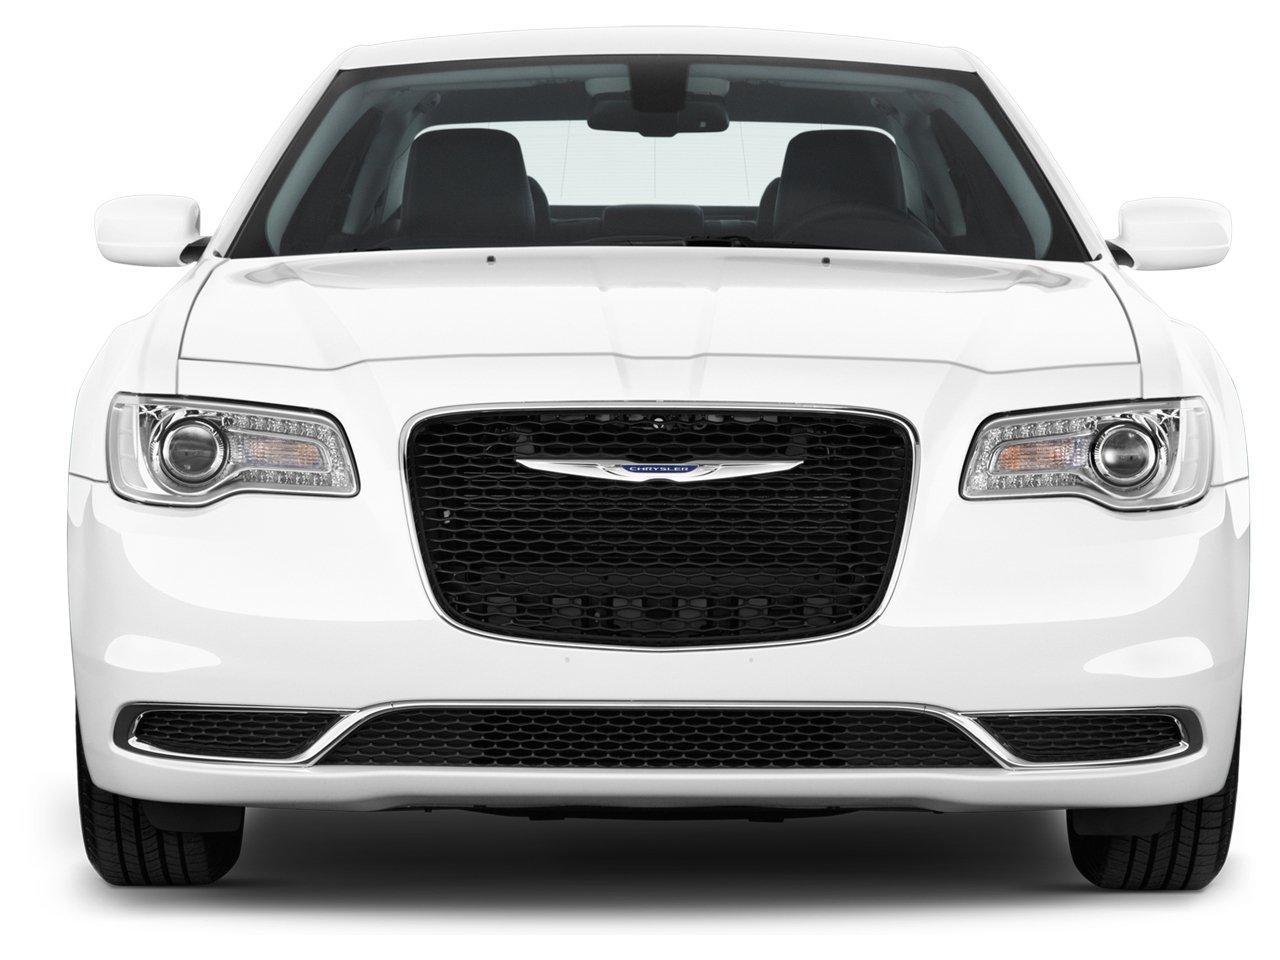 Chrysler 300 exterior - Front  